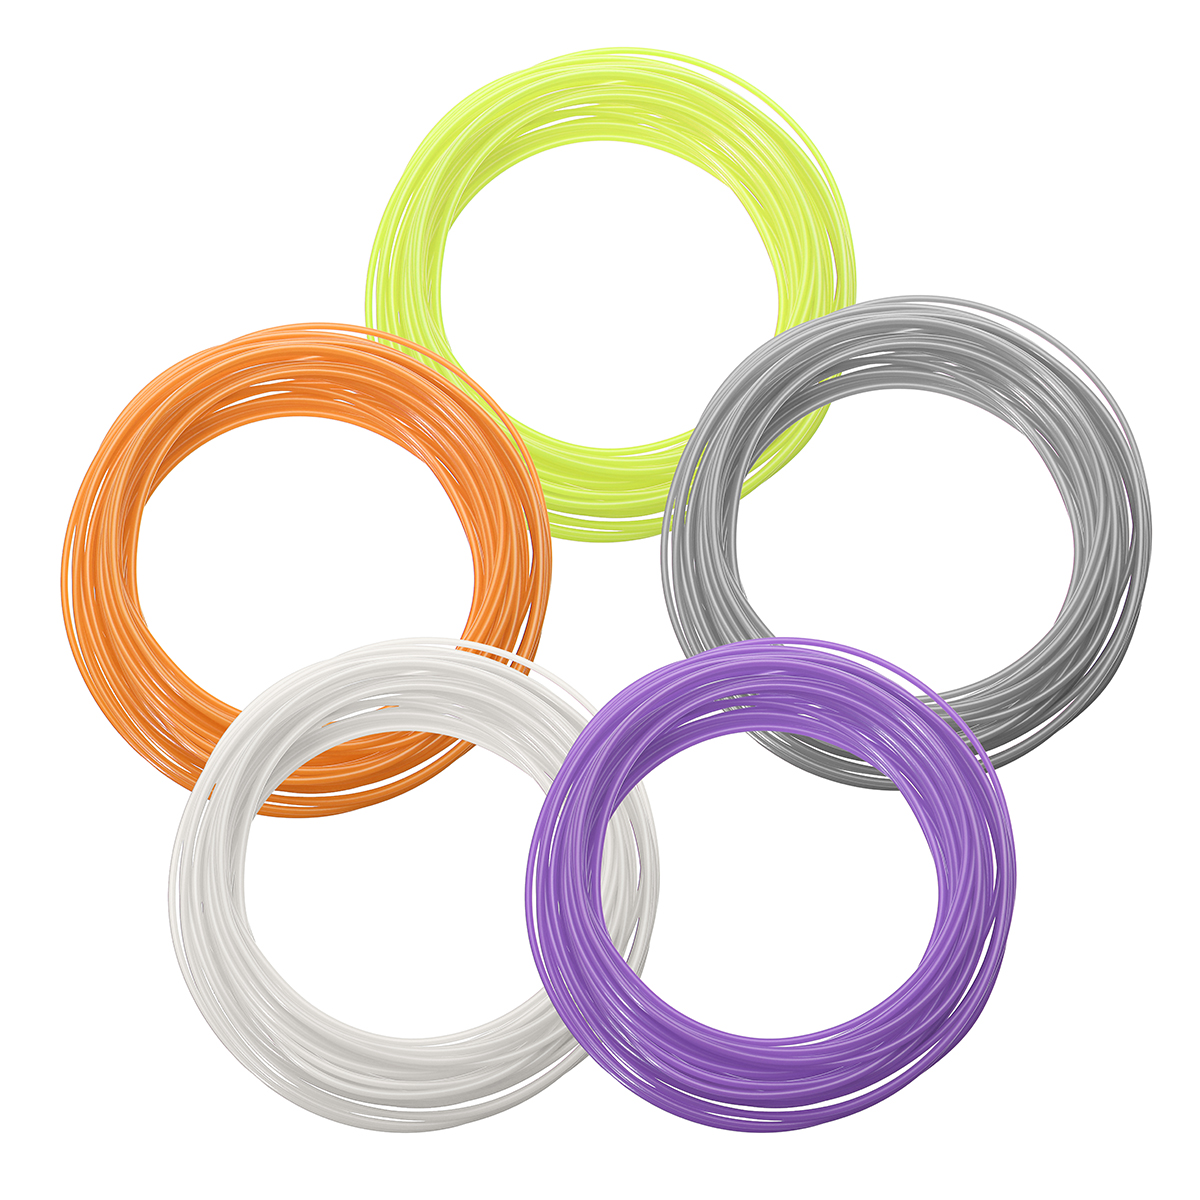 20 Colors/Pack 5/10m Length Per Color PLA 1.75mm Filament for 3D Printing Pen 0.4mm Nozzle 11